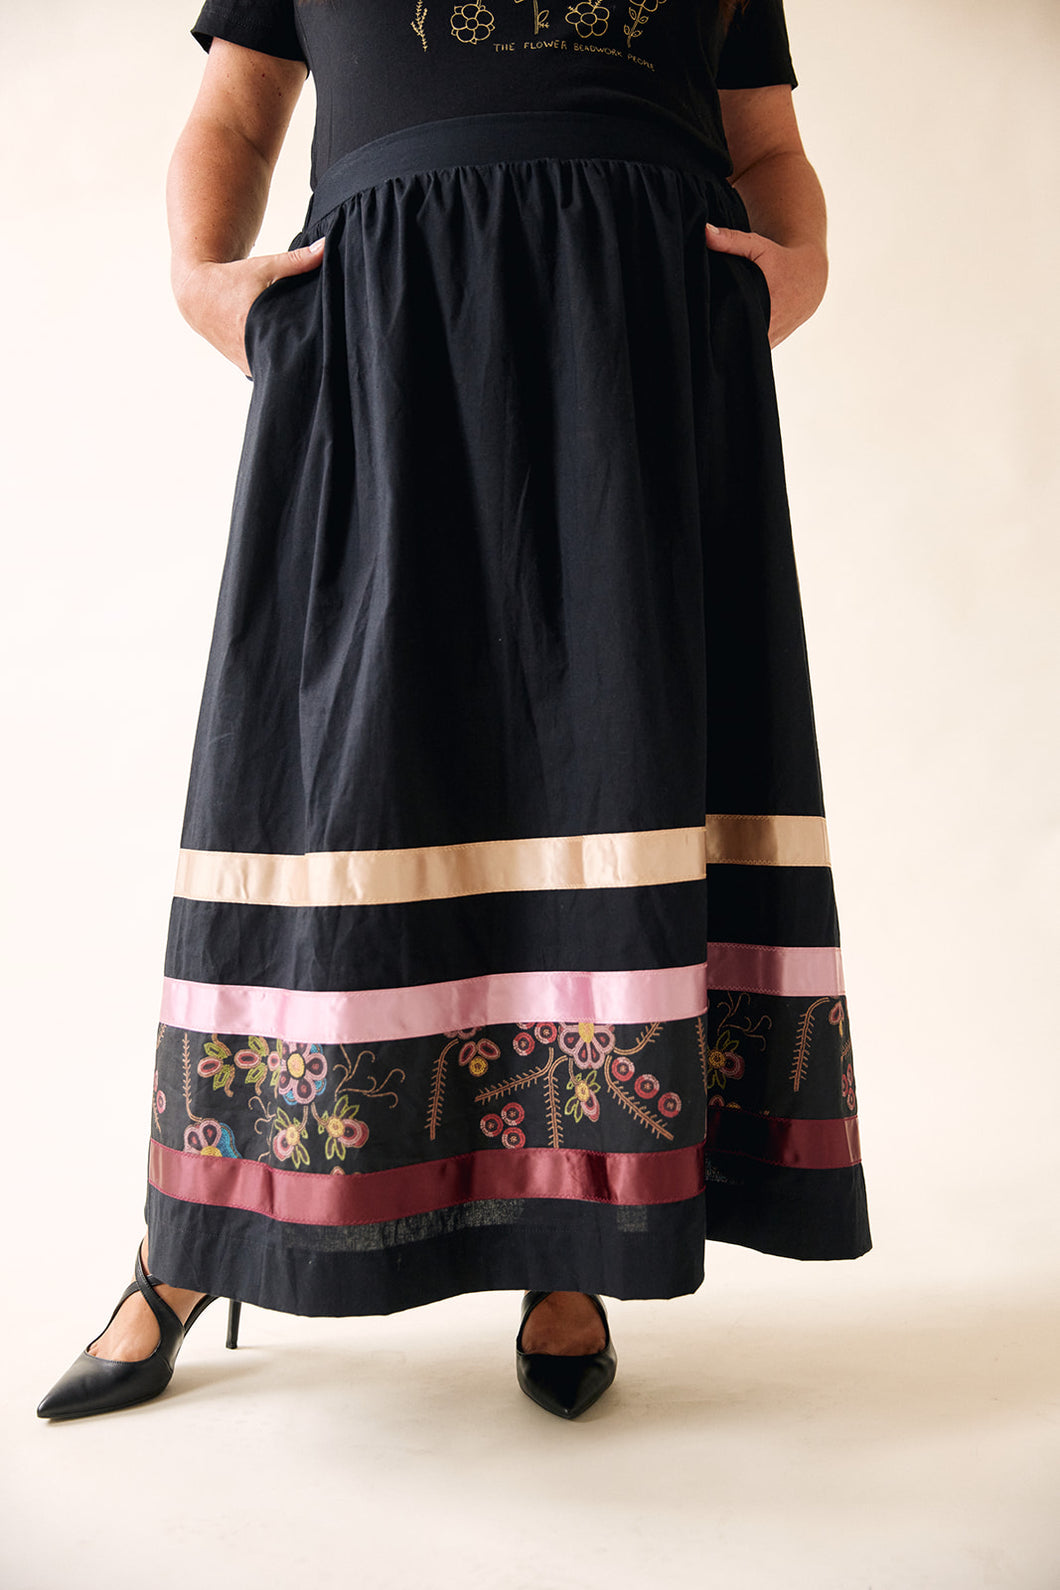 Hand sewn Ribbon Skirt - The Long Way Home Collection